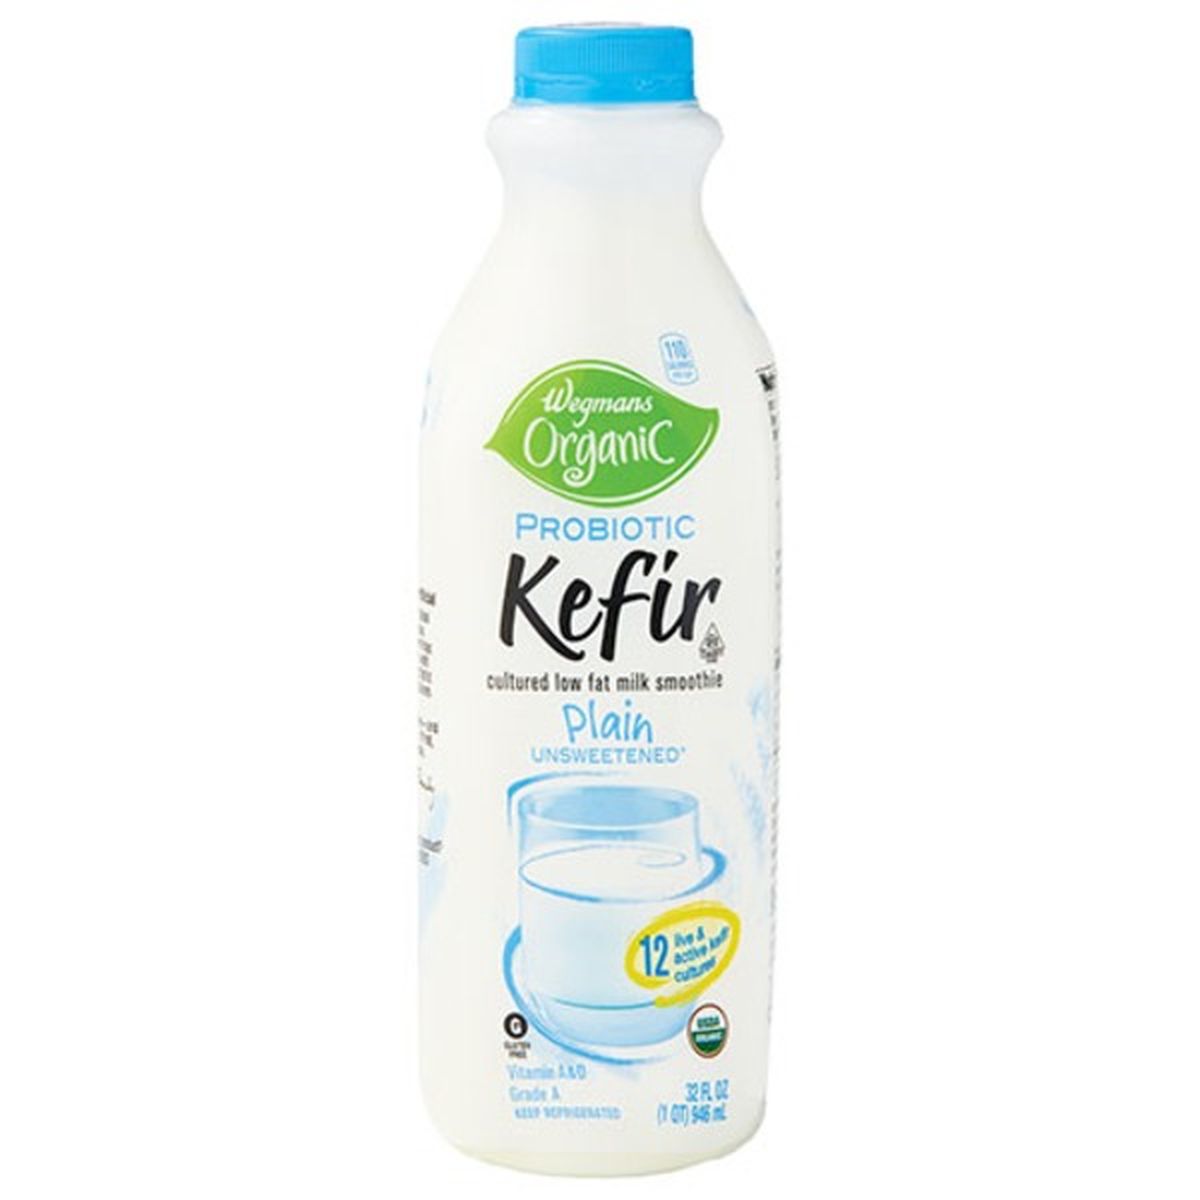 Calories in Wegmans Organic Plain Unsweetened Probiotic Kefir